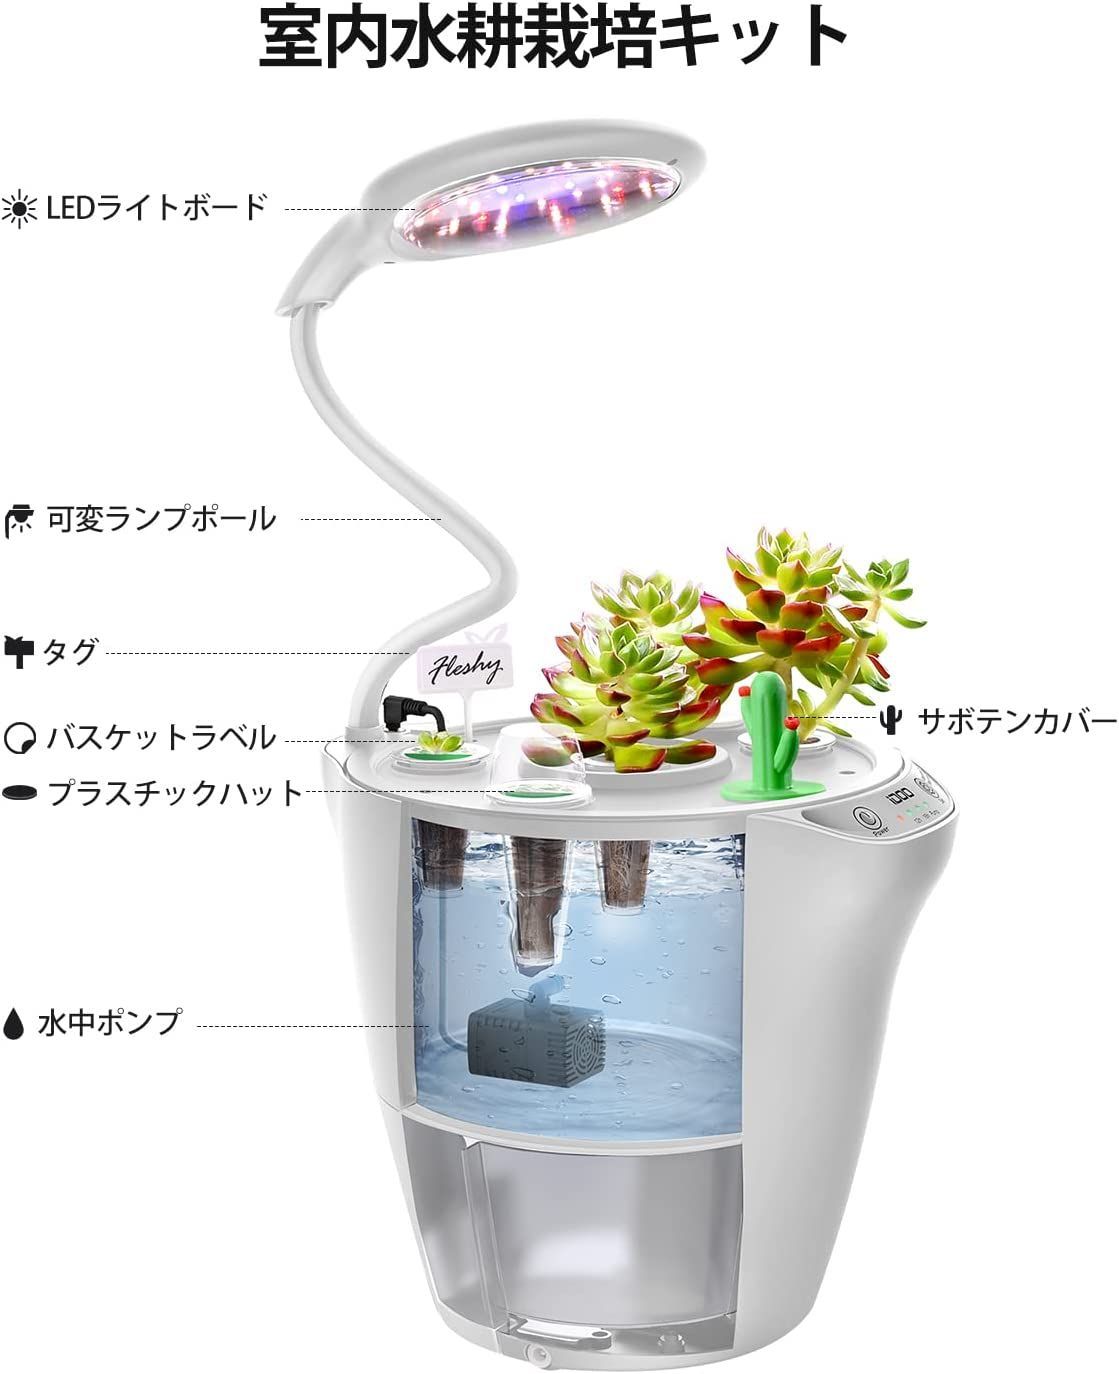 iDOO イドー 水耕栽培キット すいこう栽培キット 家庭菜園 室内 水耕栽培 水中ポンプ搭載 同時に8株野菜栽培可能 植物育成LEDライト - 1